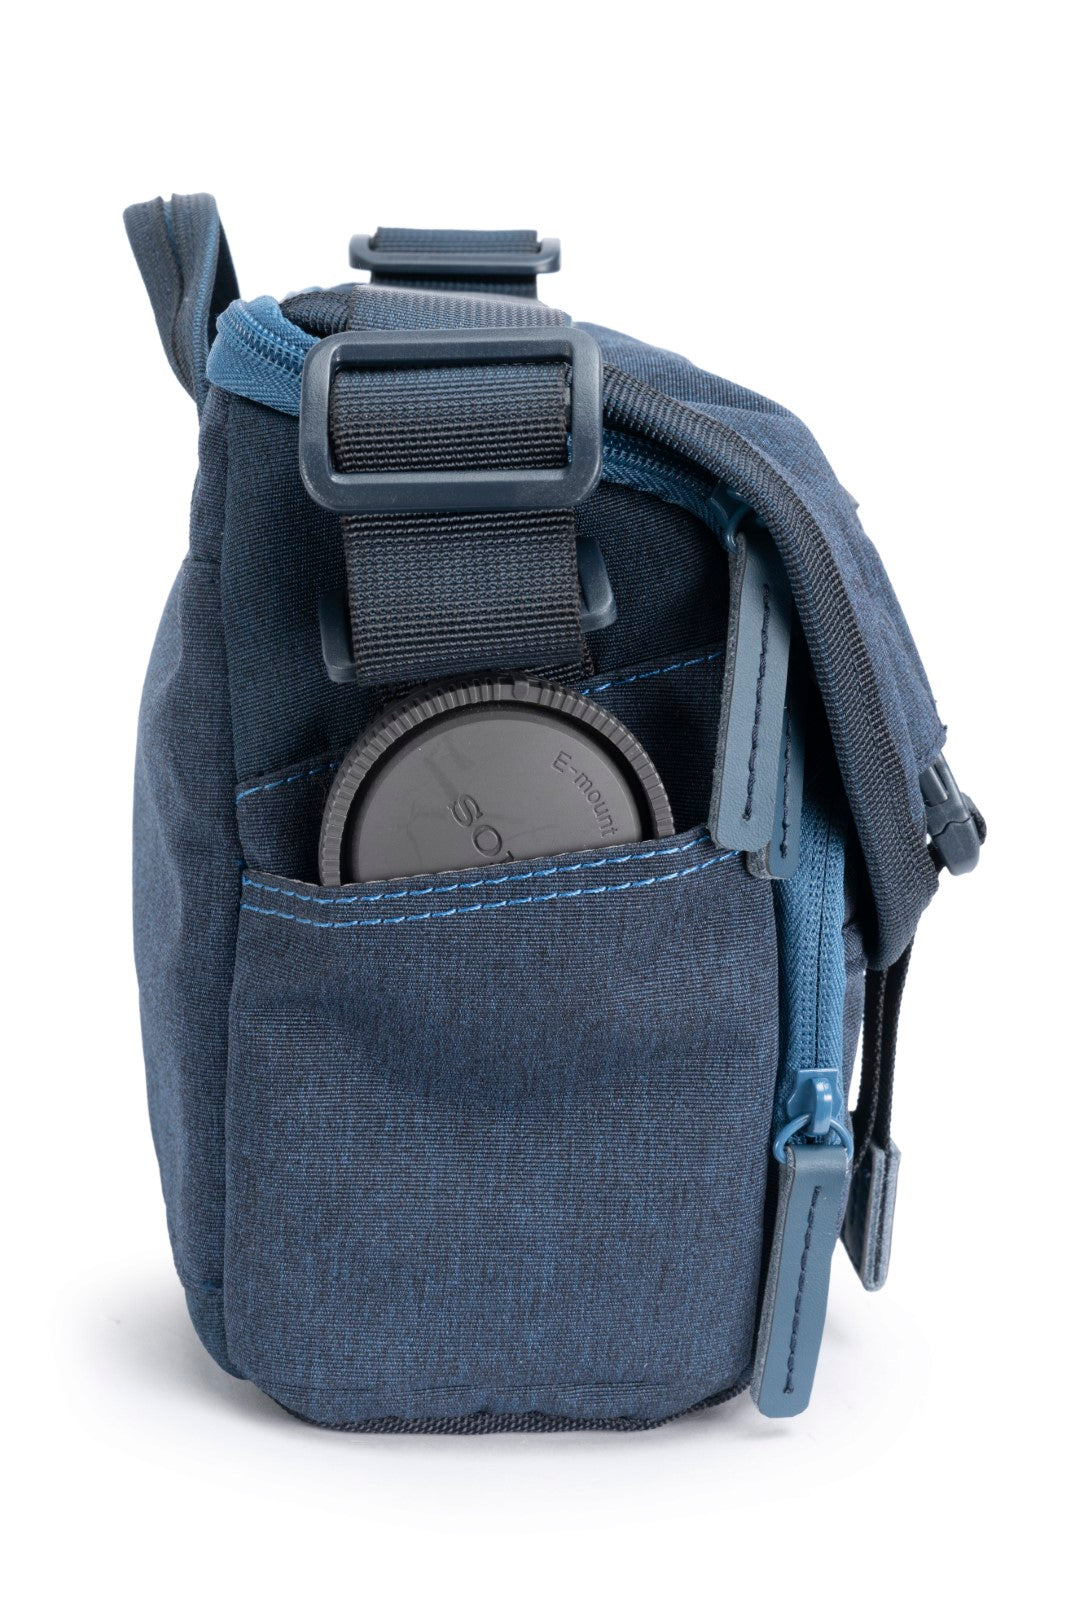 READY NEW ARRIVAL, HARD TO GET‼️ Cap Vert Sling Bag Camera Bag Navy Blue -  Unisex Size 24x15x9 cm IDR 38.8 jt